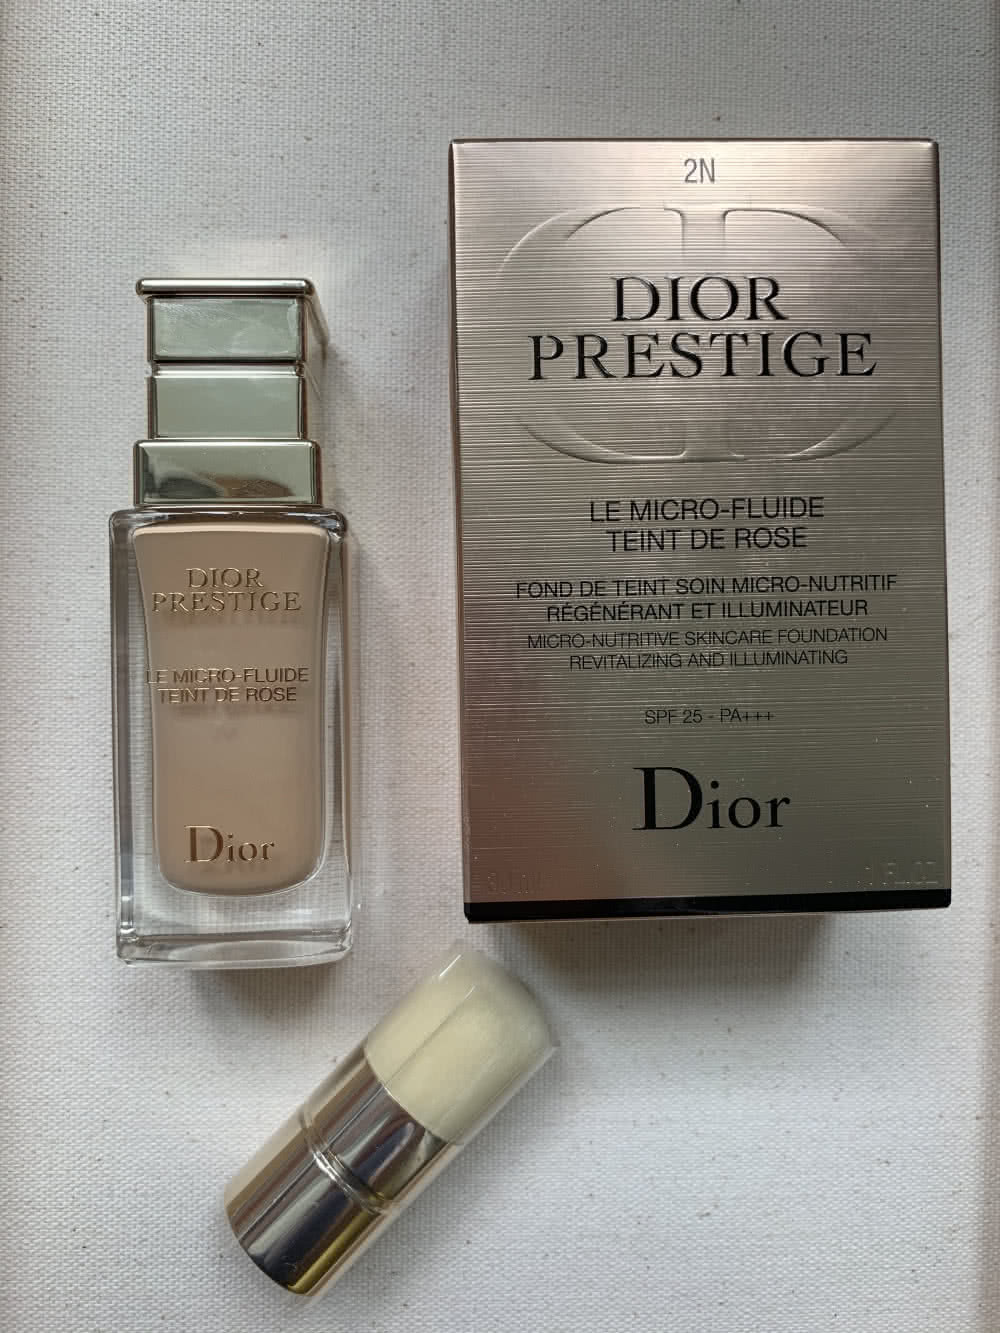 Dior Prestige le micro-fluide teint de rose 2N